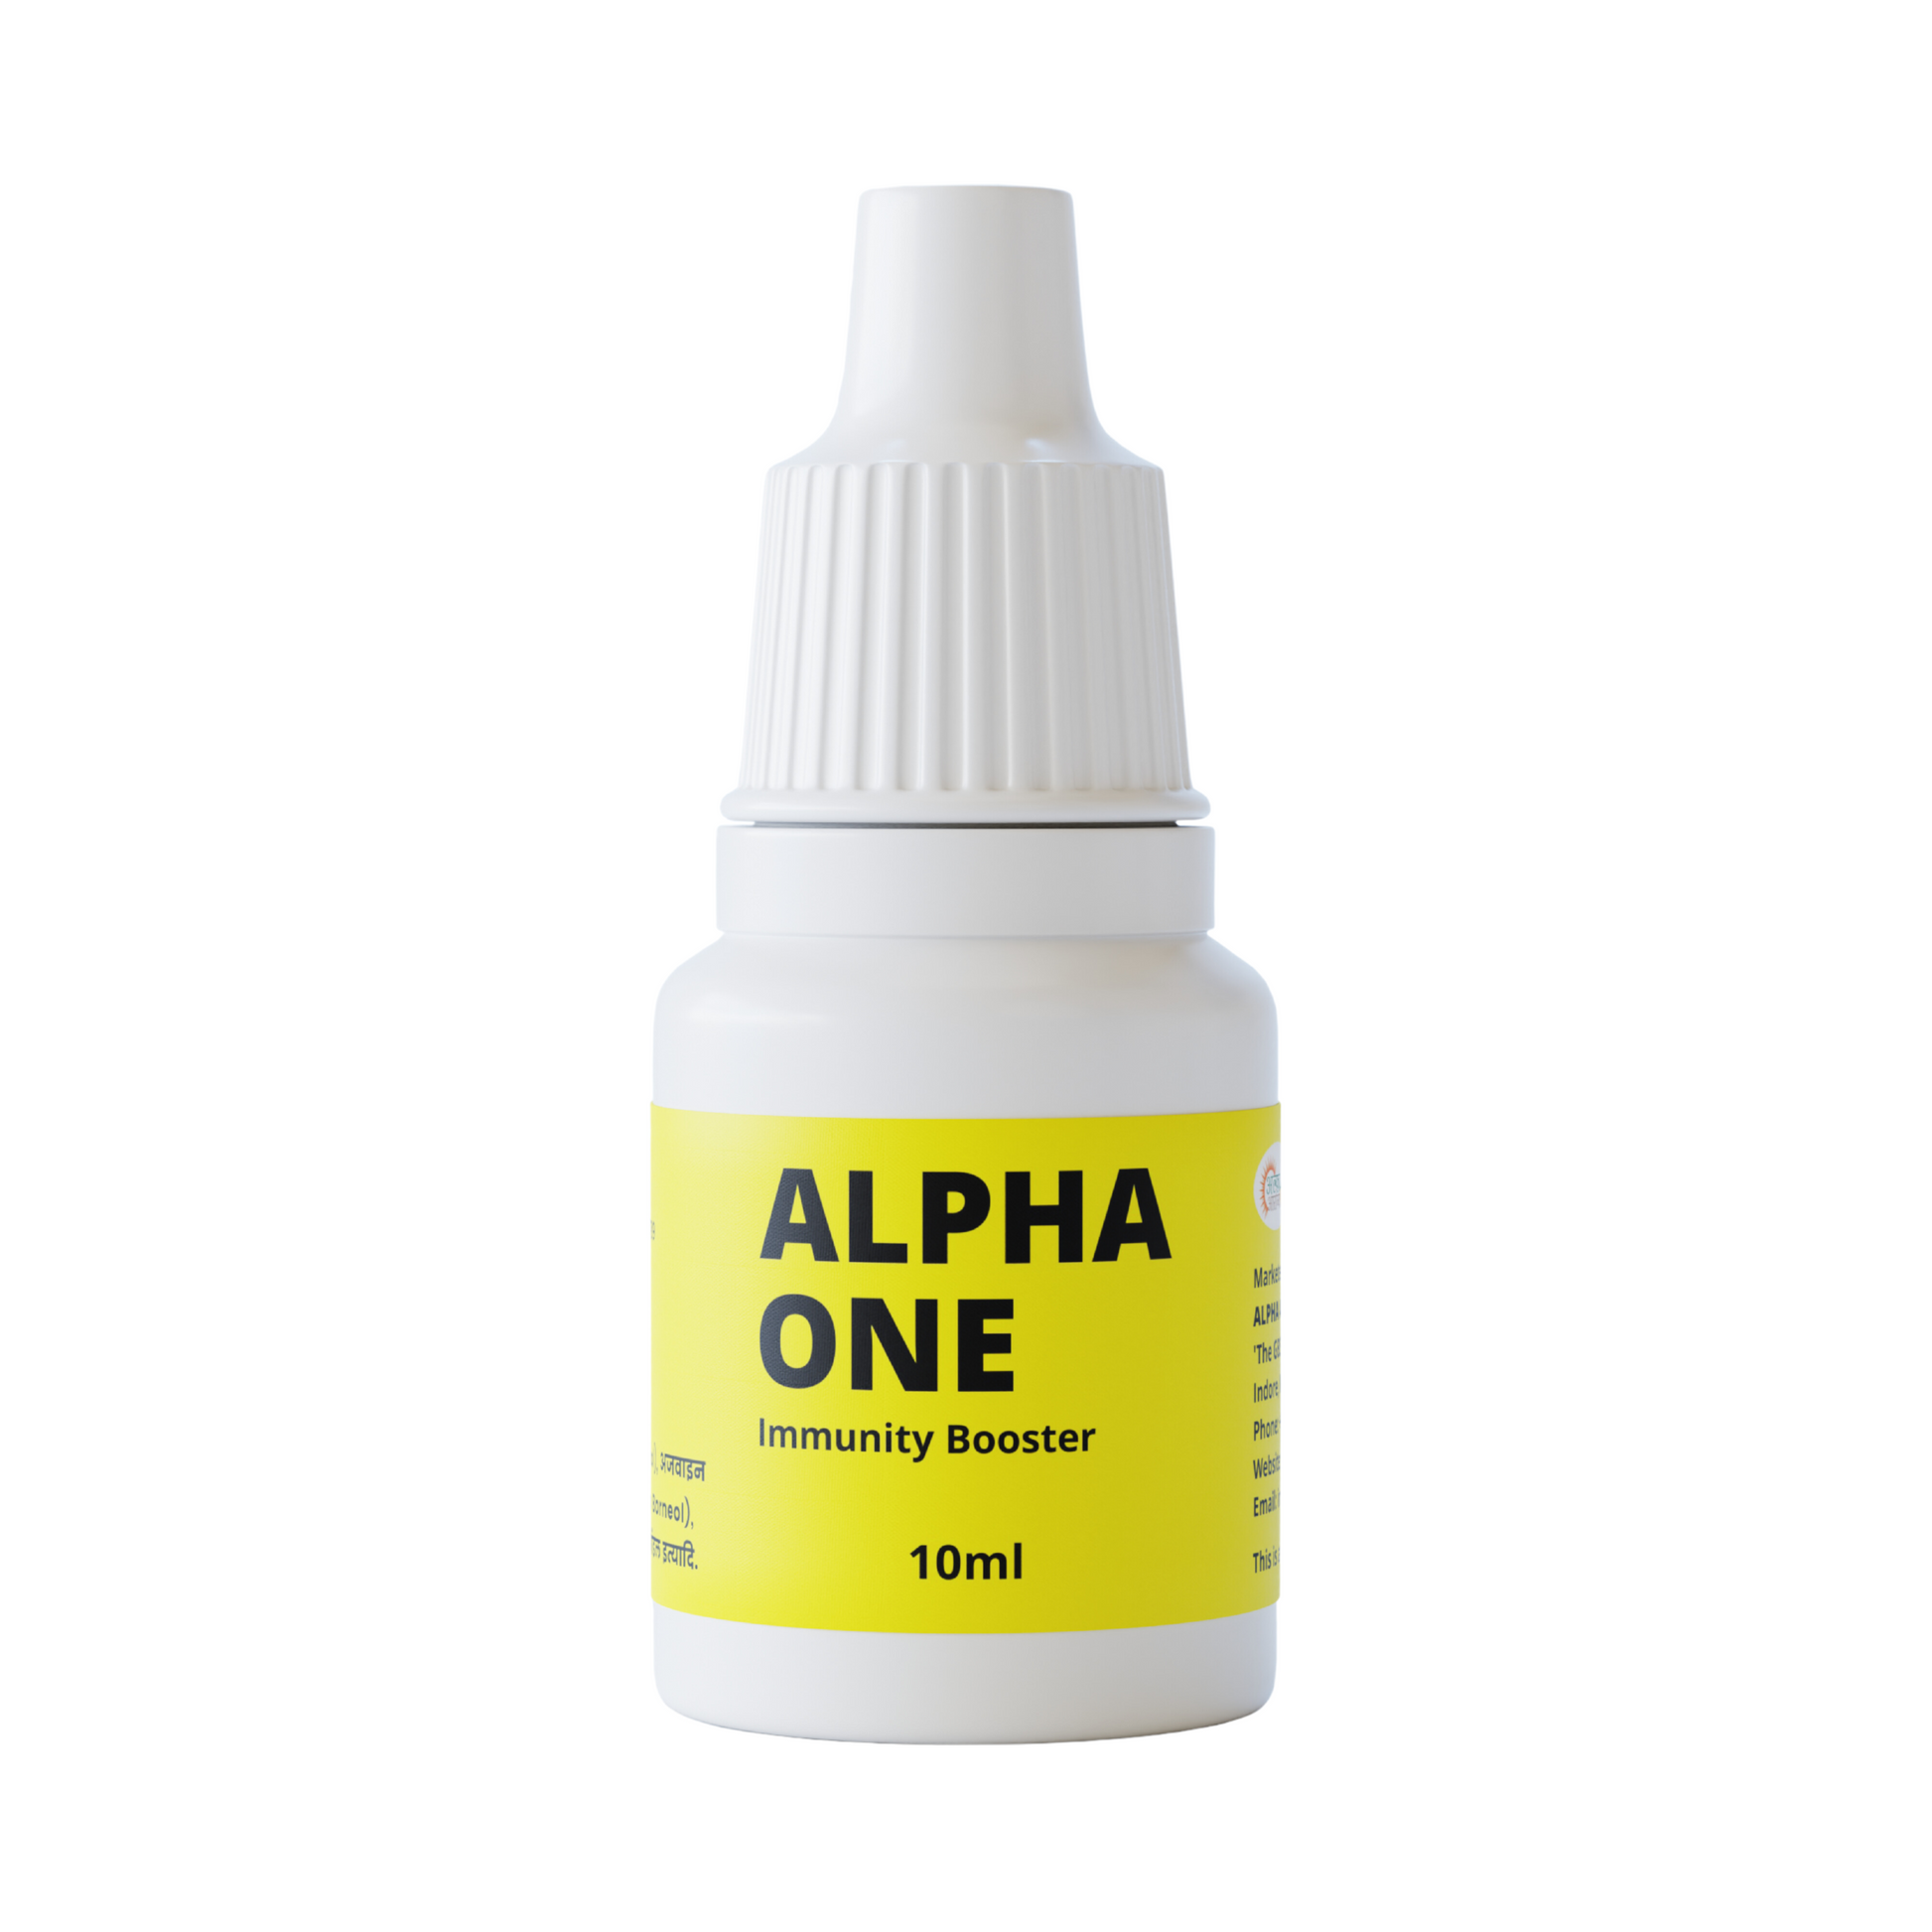 Alpha one ayurvedic medicine for immunity booster